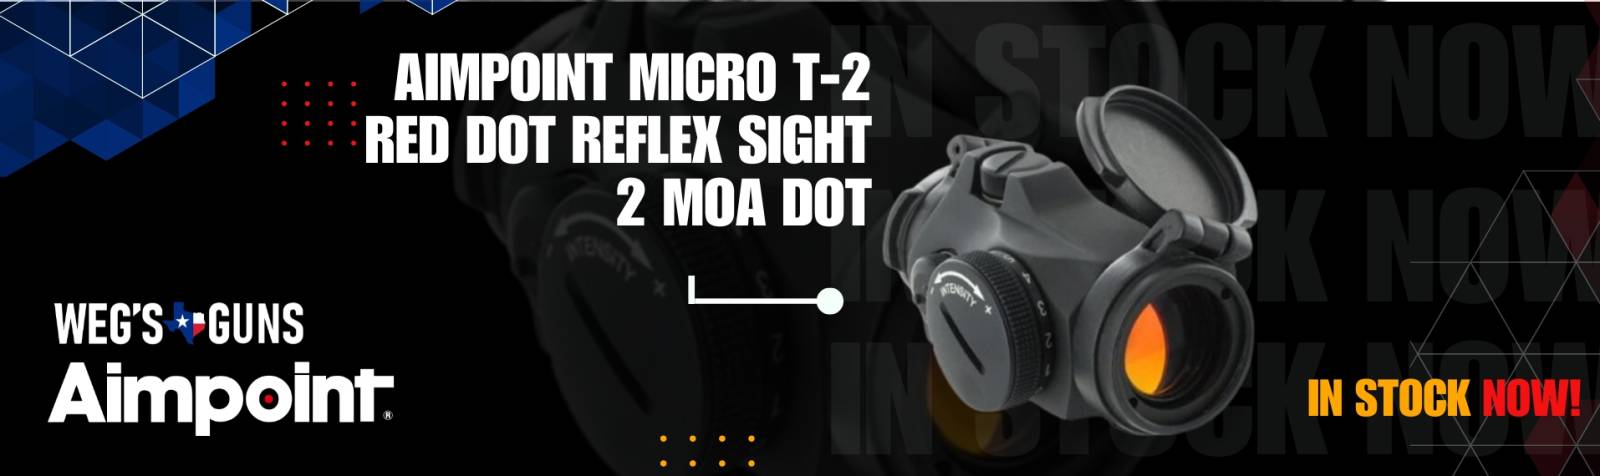 3Aimpoint Micro T-2 Red Dot Reflex Sight 2 MOA Dot